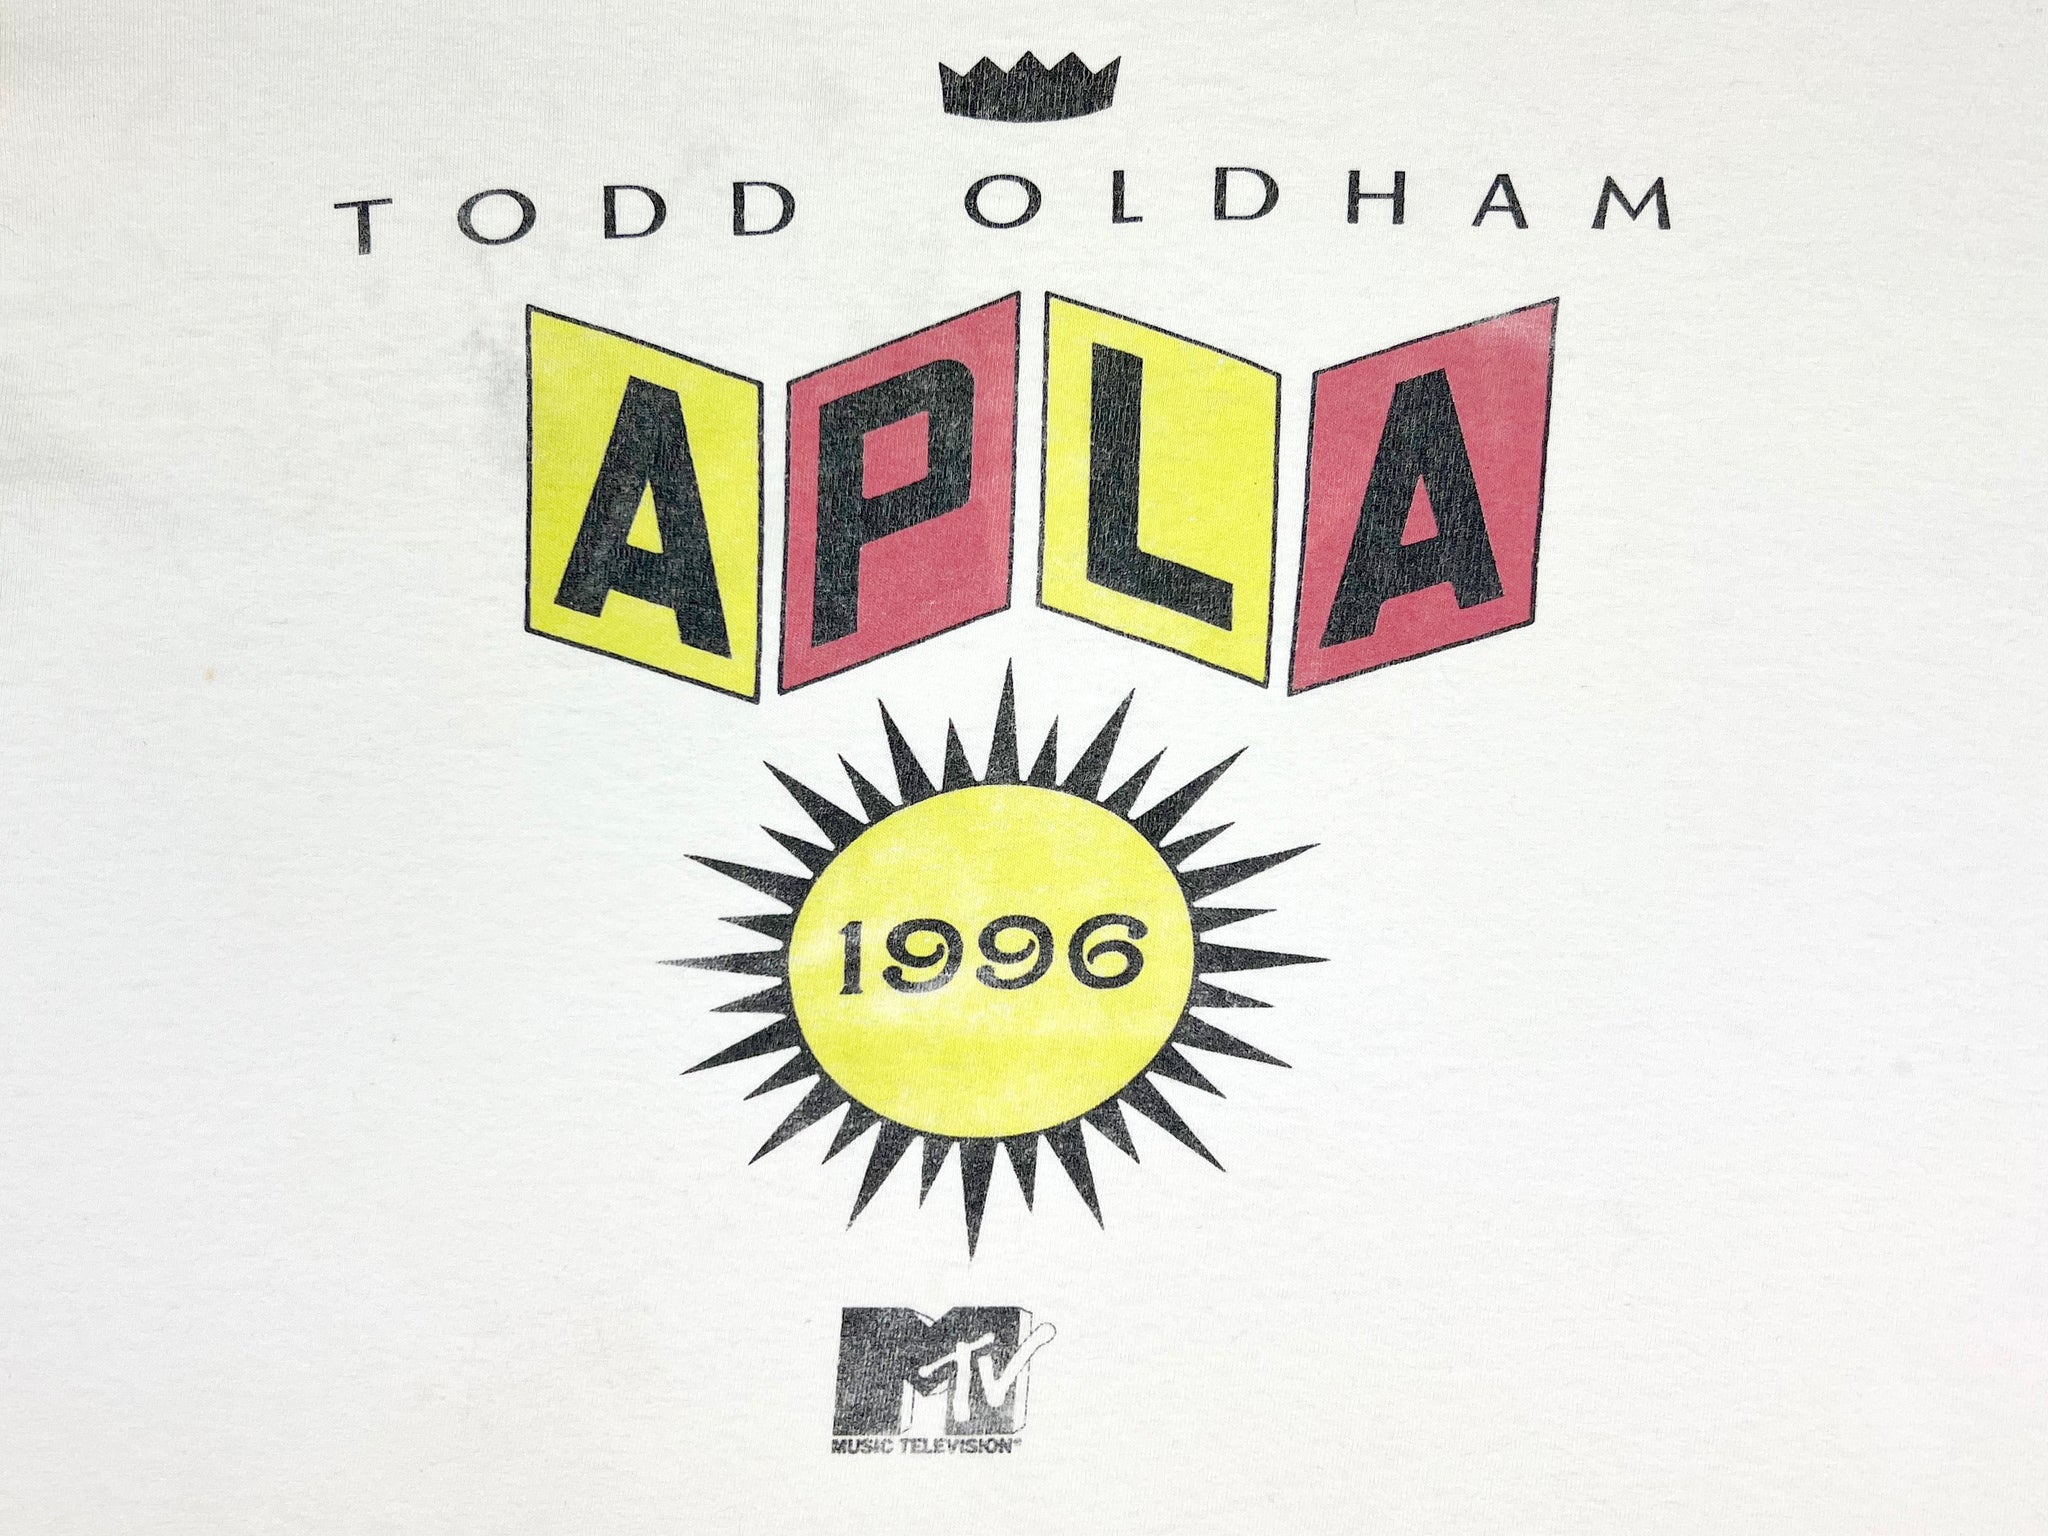 Todd Oldham APLA MTV 1996 T-Shirt